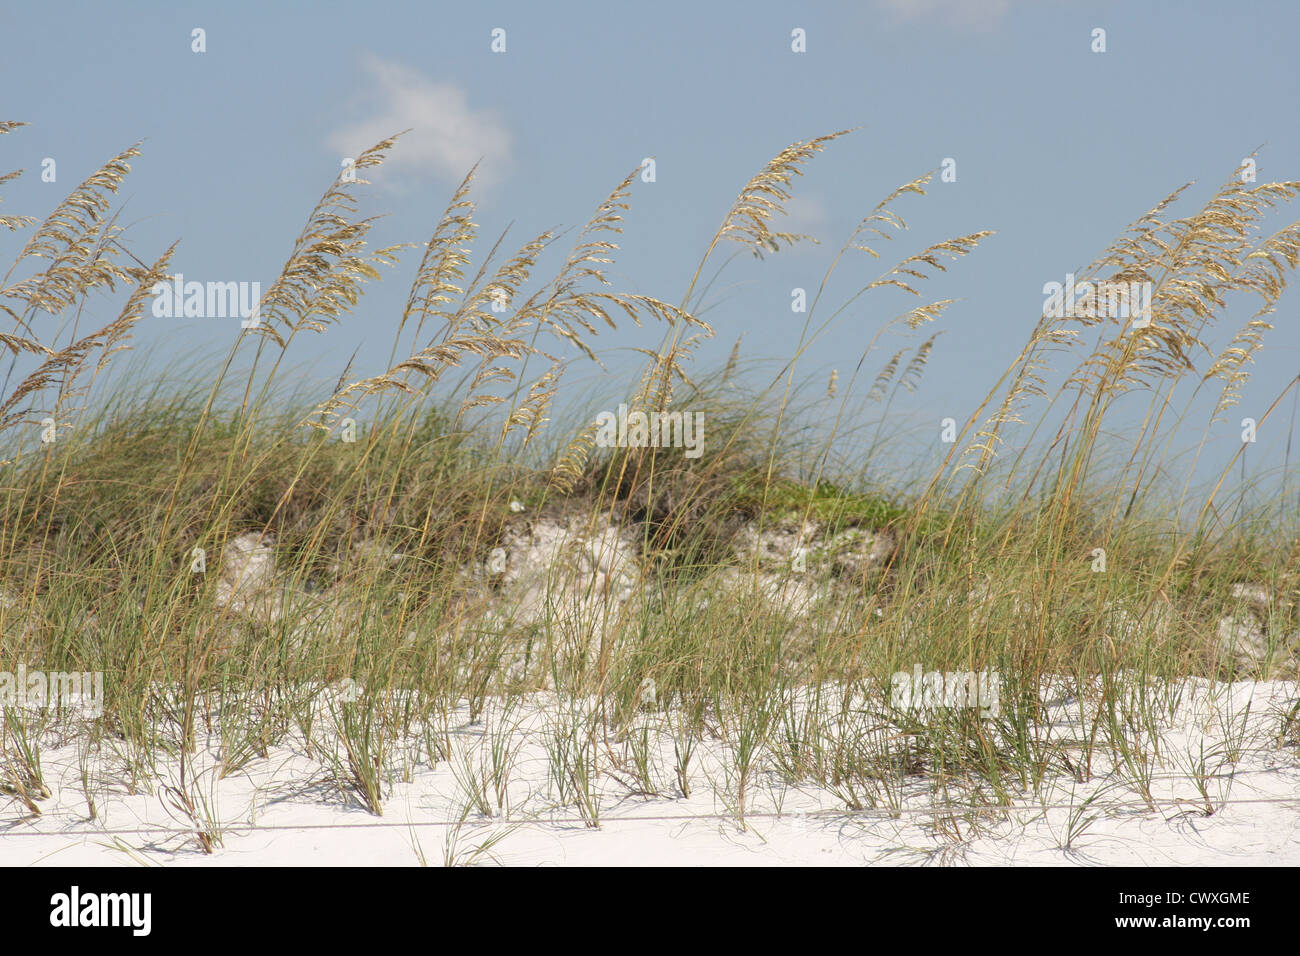 beach sand dunes and tall grass reeds Stock Photo